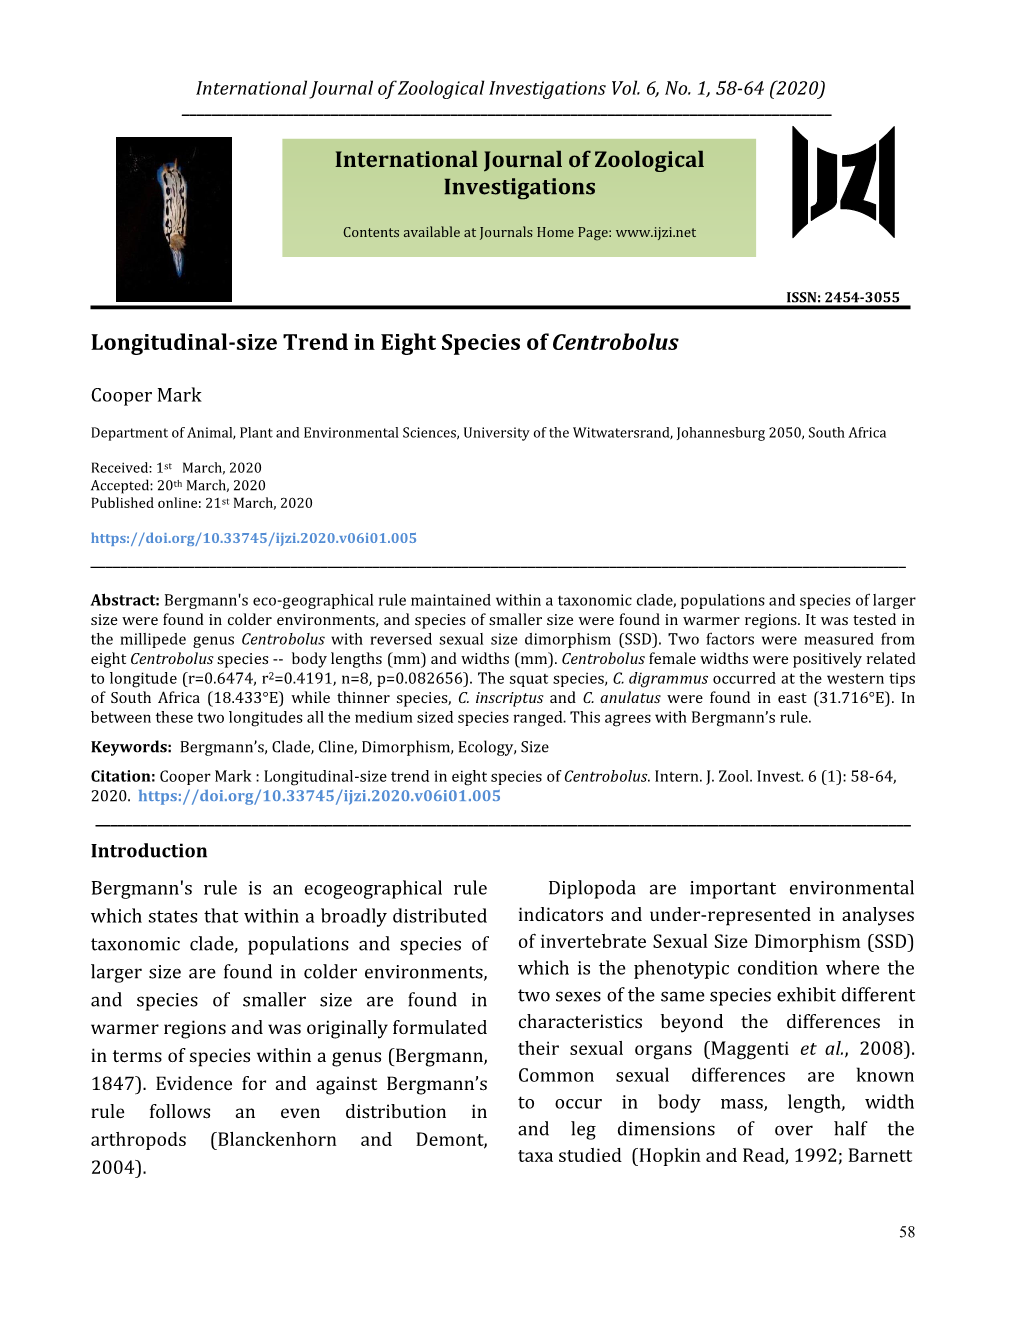 Longitudinal-Size Trend in Eight Species of Centrobolus